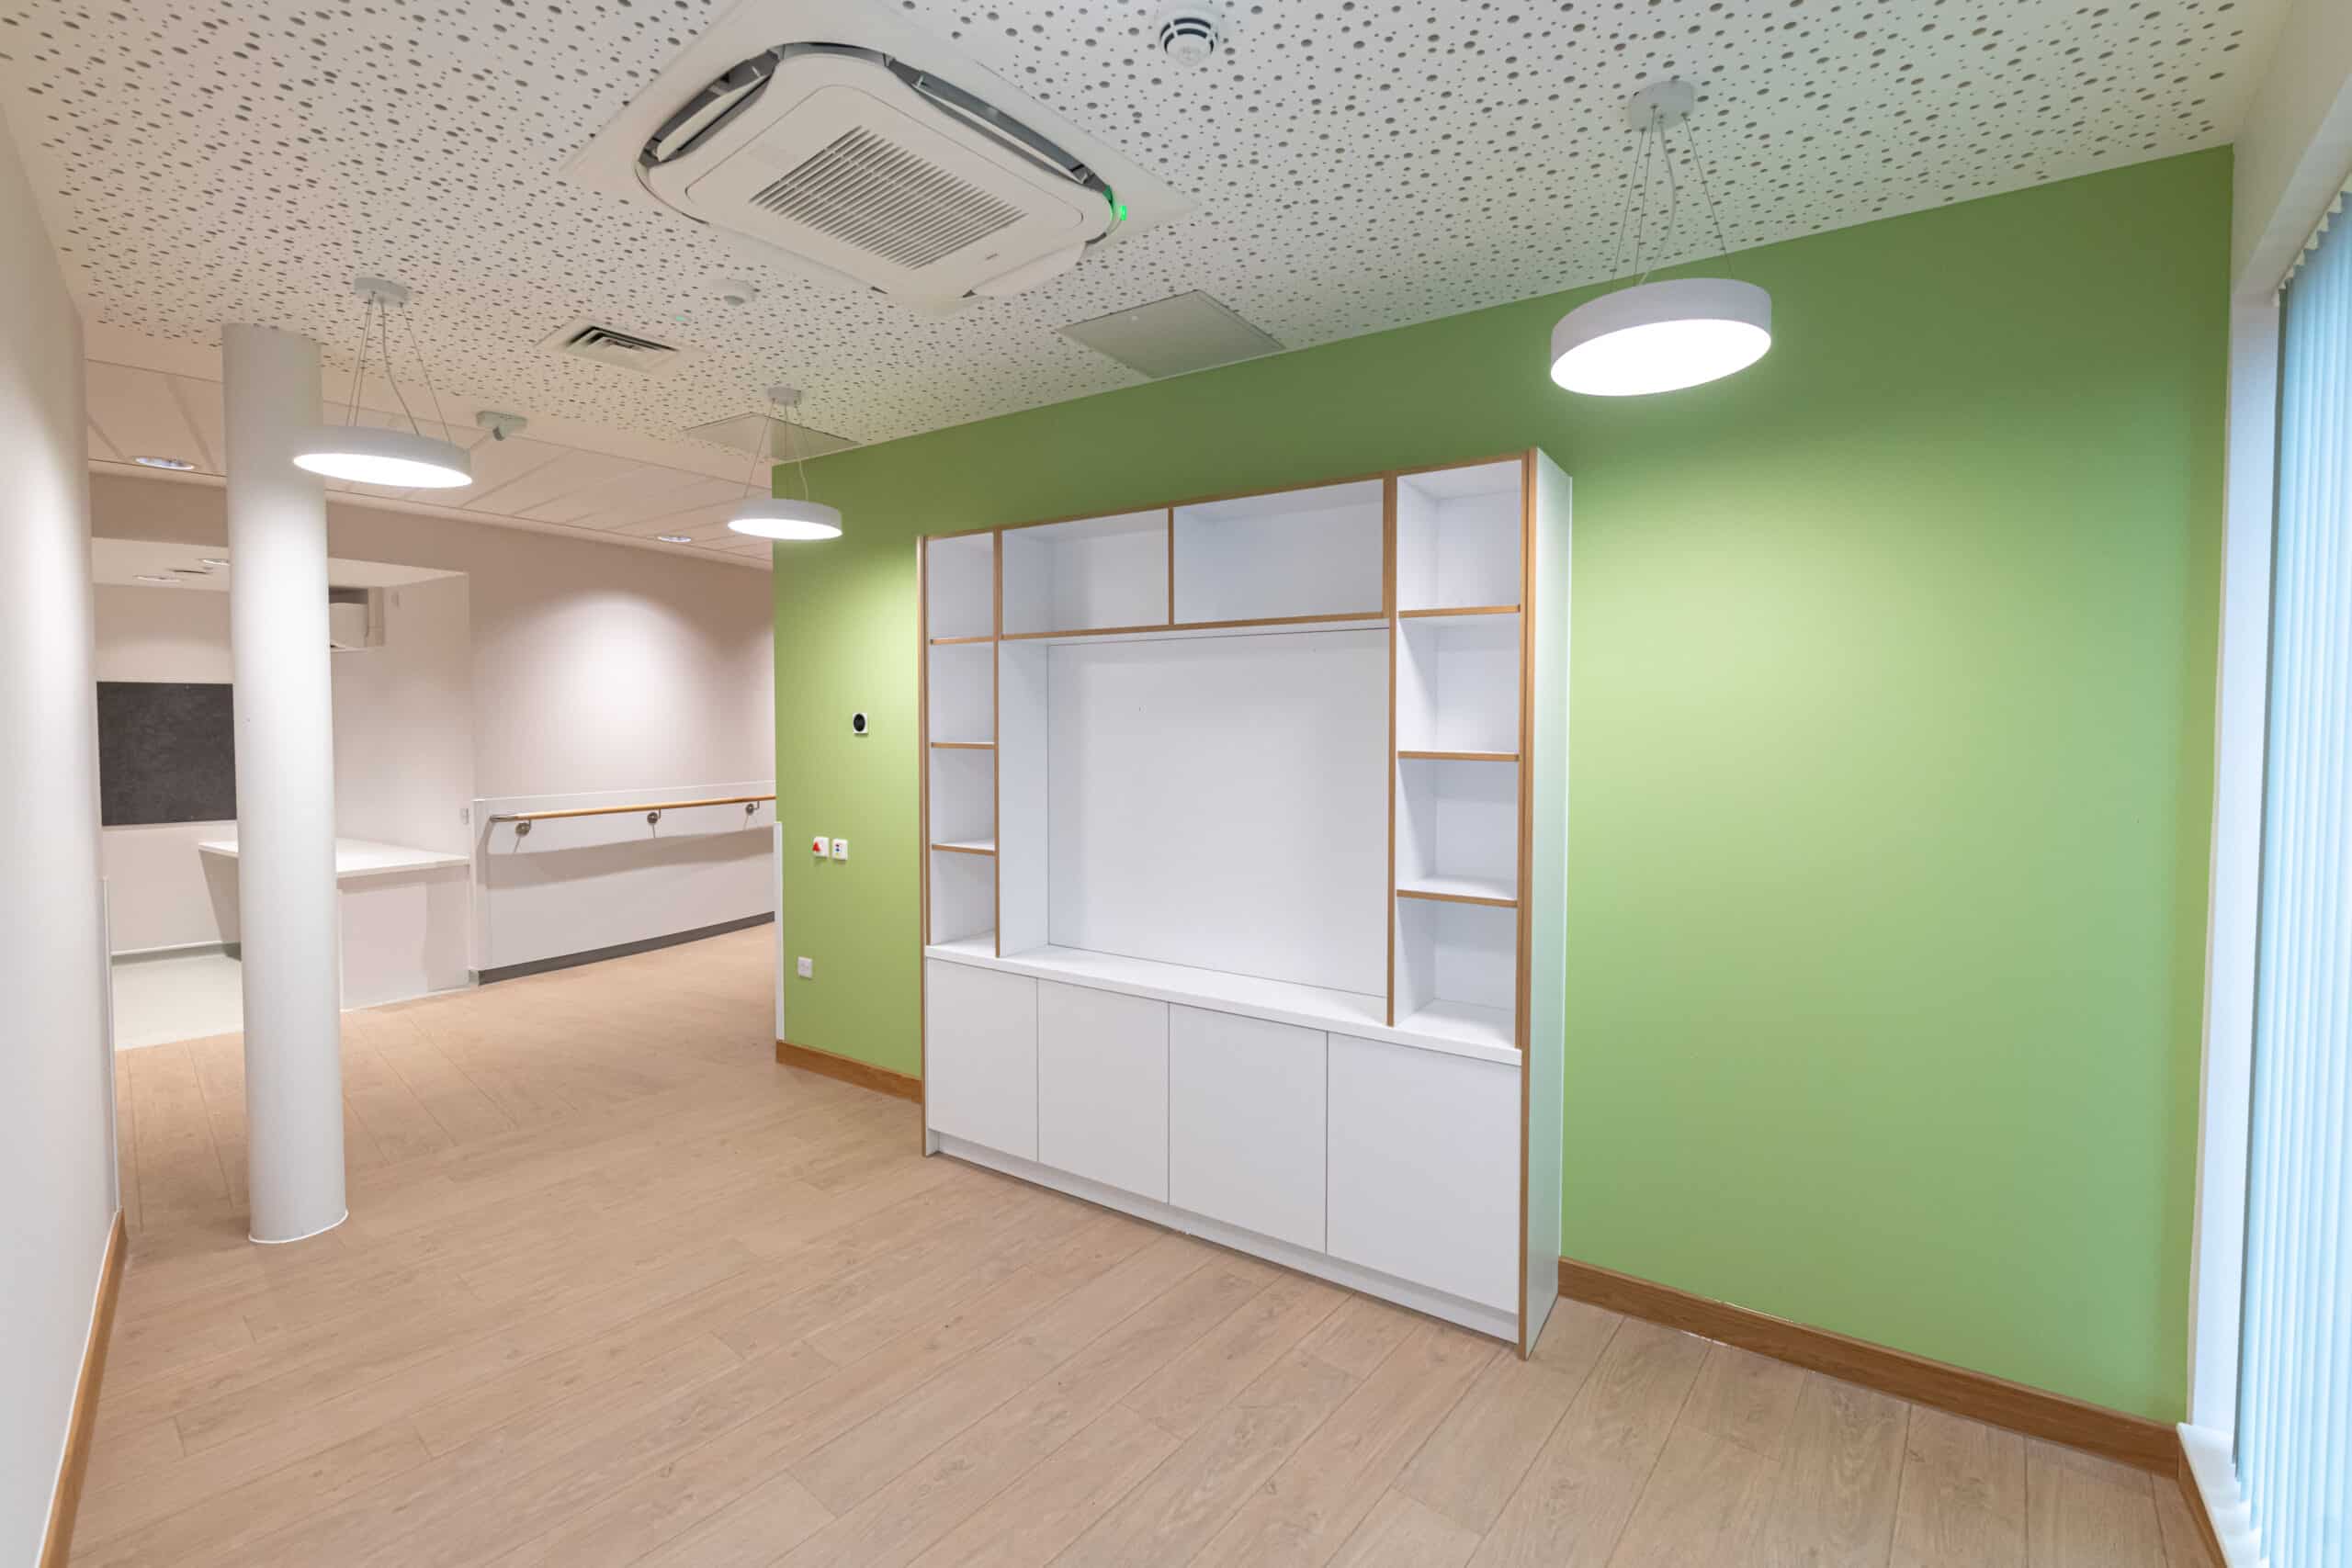 Bespoke cabinetry installed at Milton Keynes cancer centre